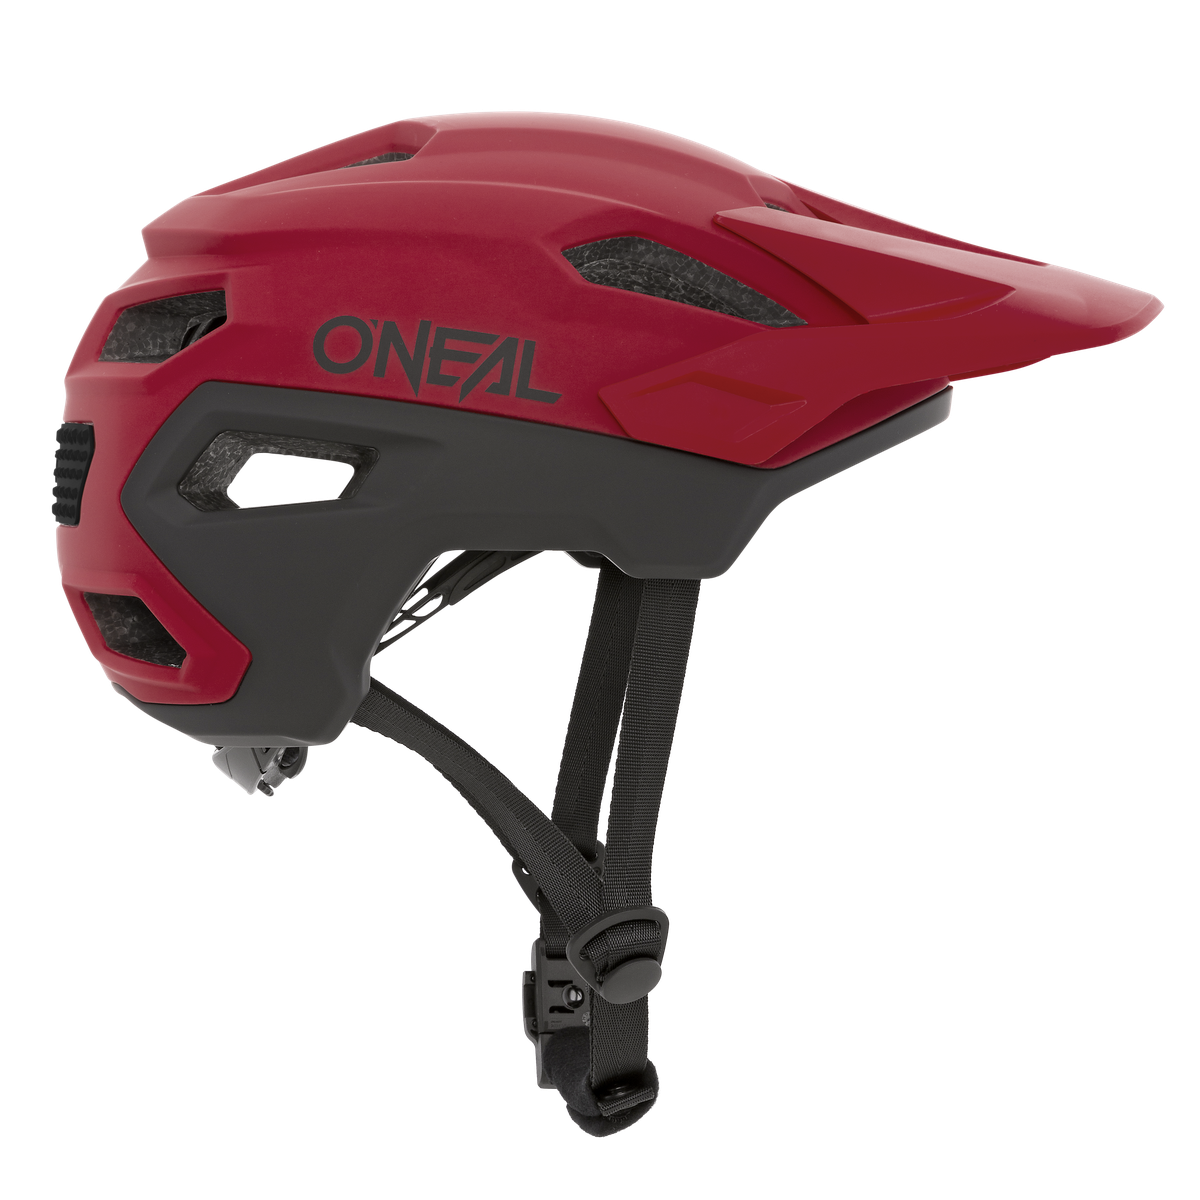 TRAILFINDER Helmet SPLIT red S/M (54-58 cm) – AVAILABLE IN SELECTED BIKE SHOPS